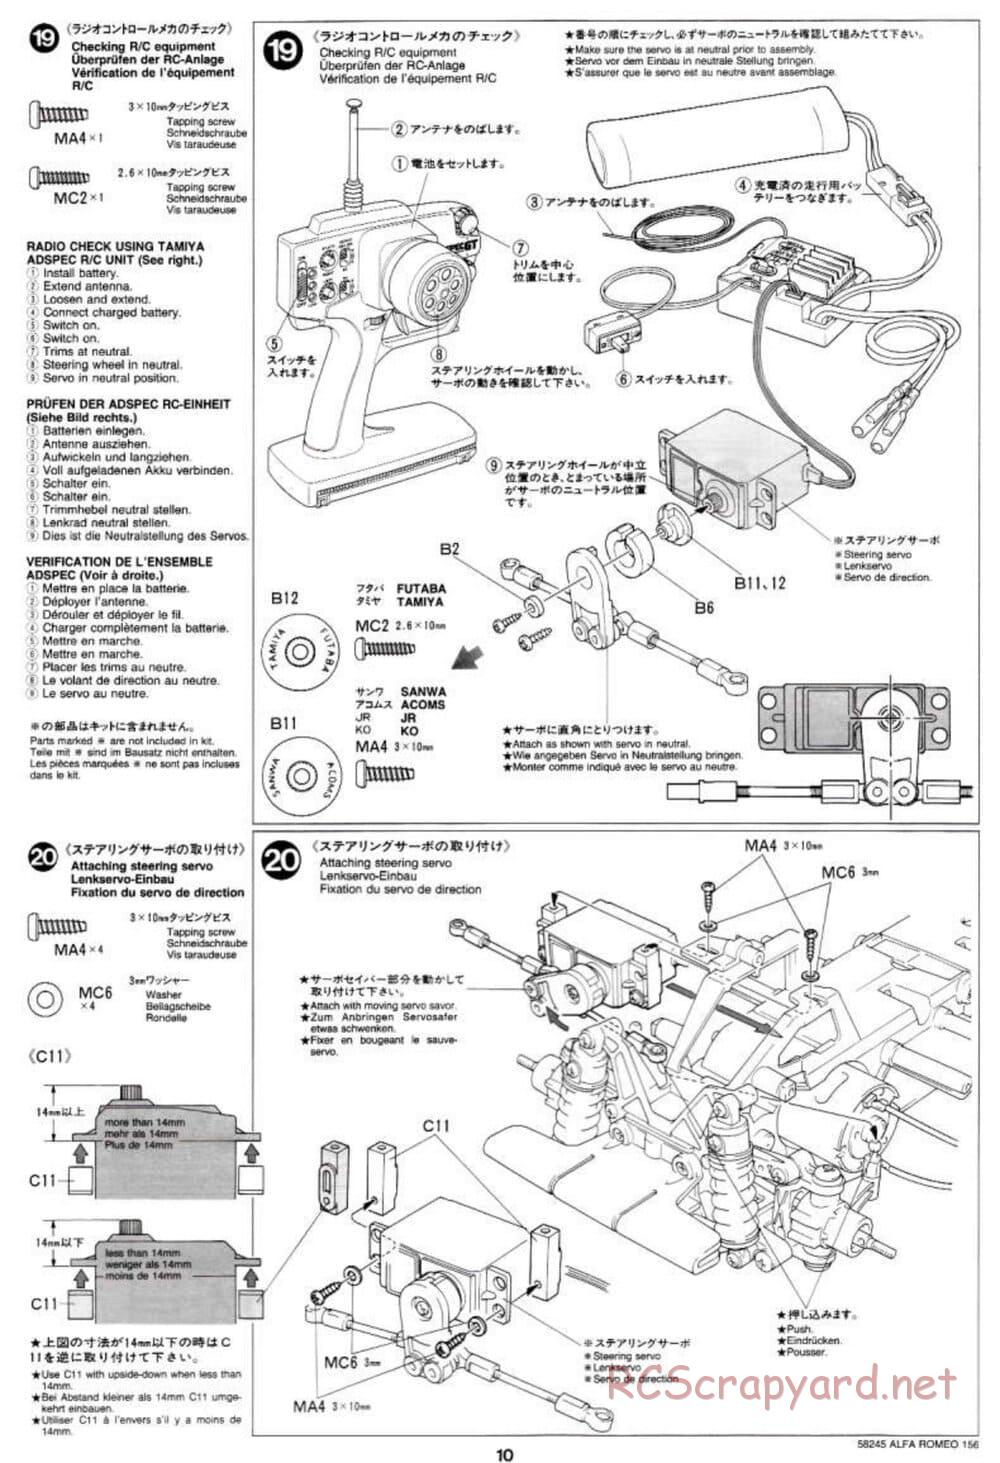 Tamiya - Alfa Romeo 156 Racing - FF-02 Chassis - Manual - Page 10